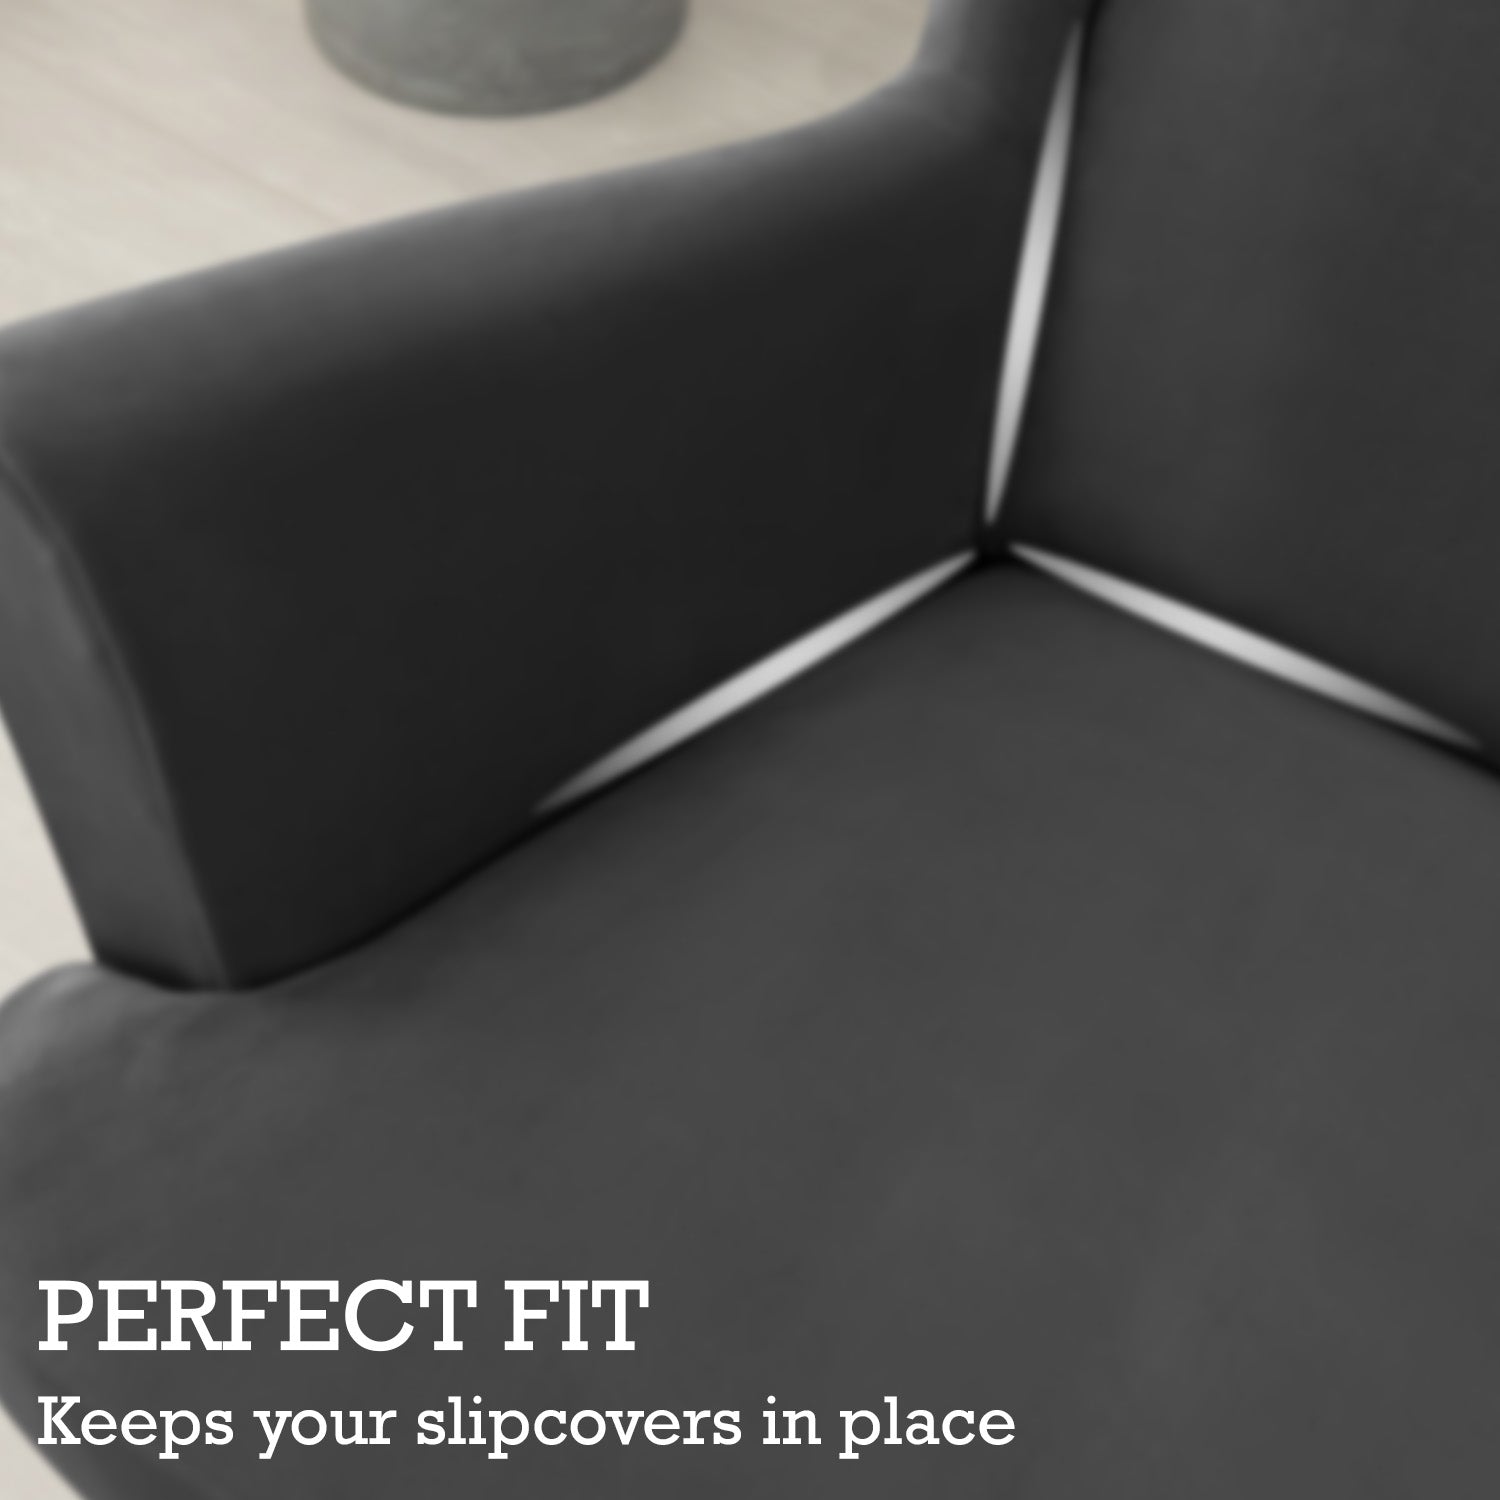 Premium Original Velvet Wing Chair Cover, Dark Grey